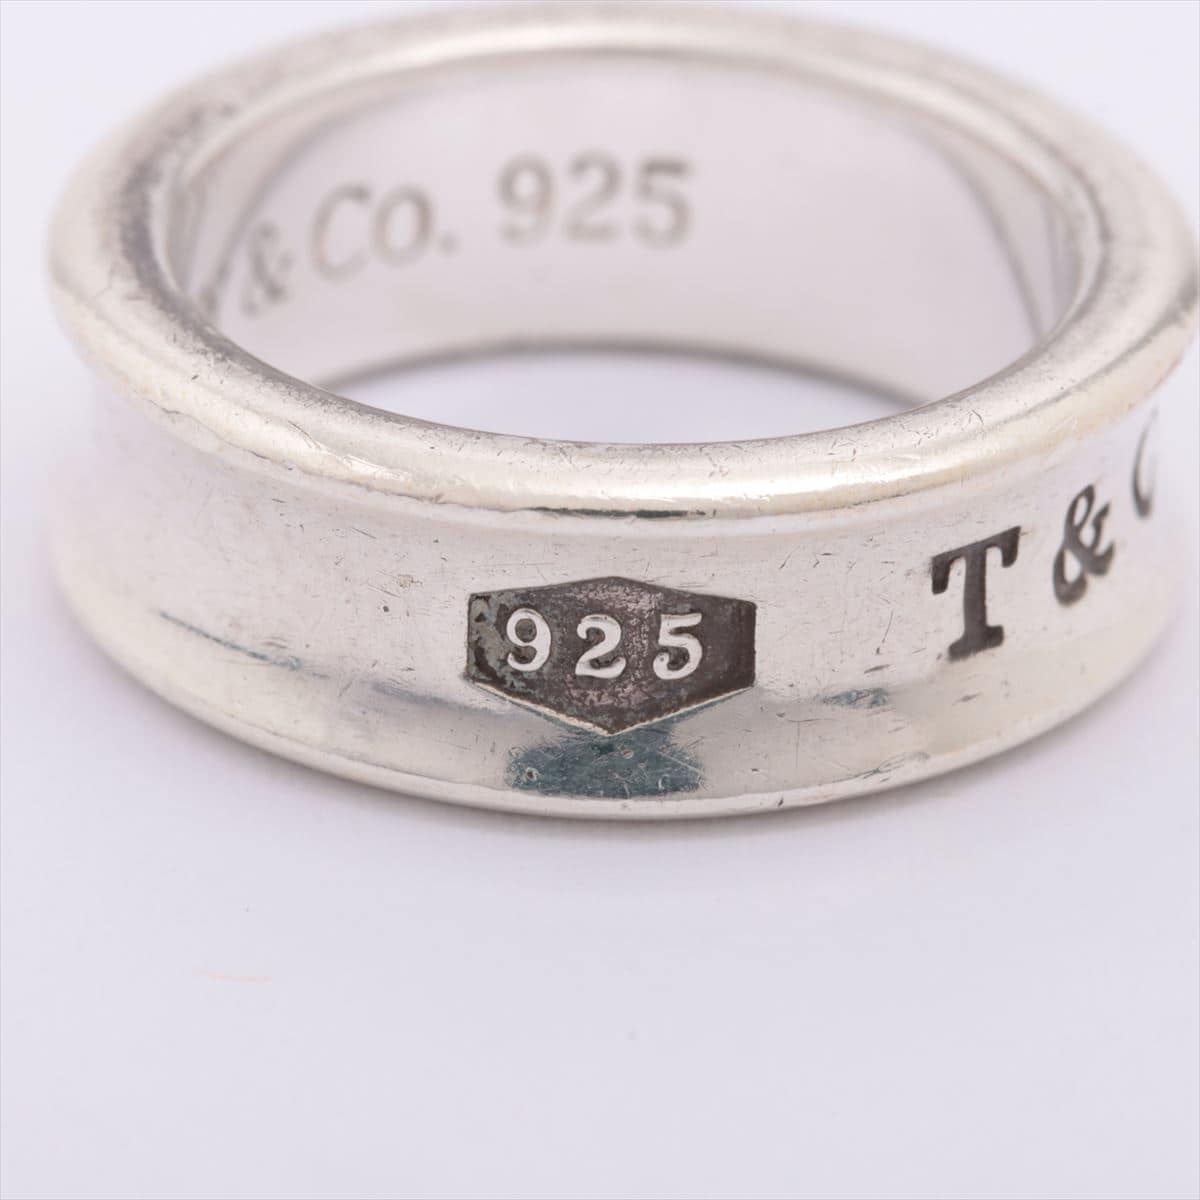 Tiffany 1837 Narrow rings 925 7.7g Silver